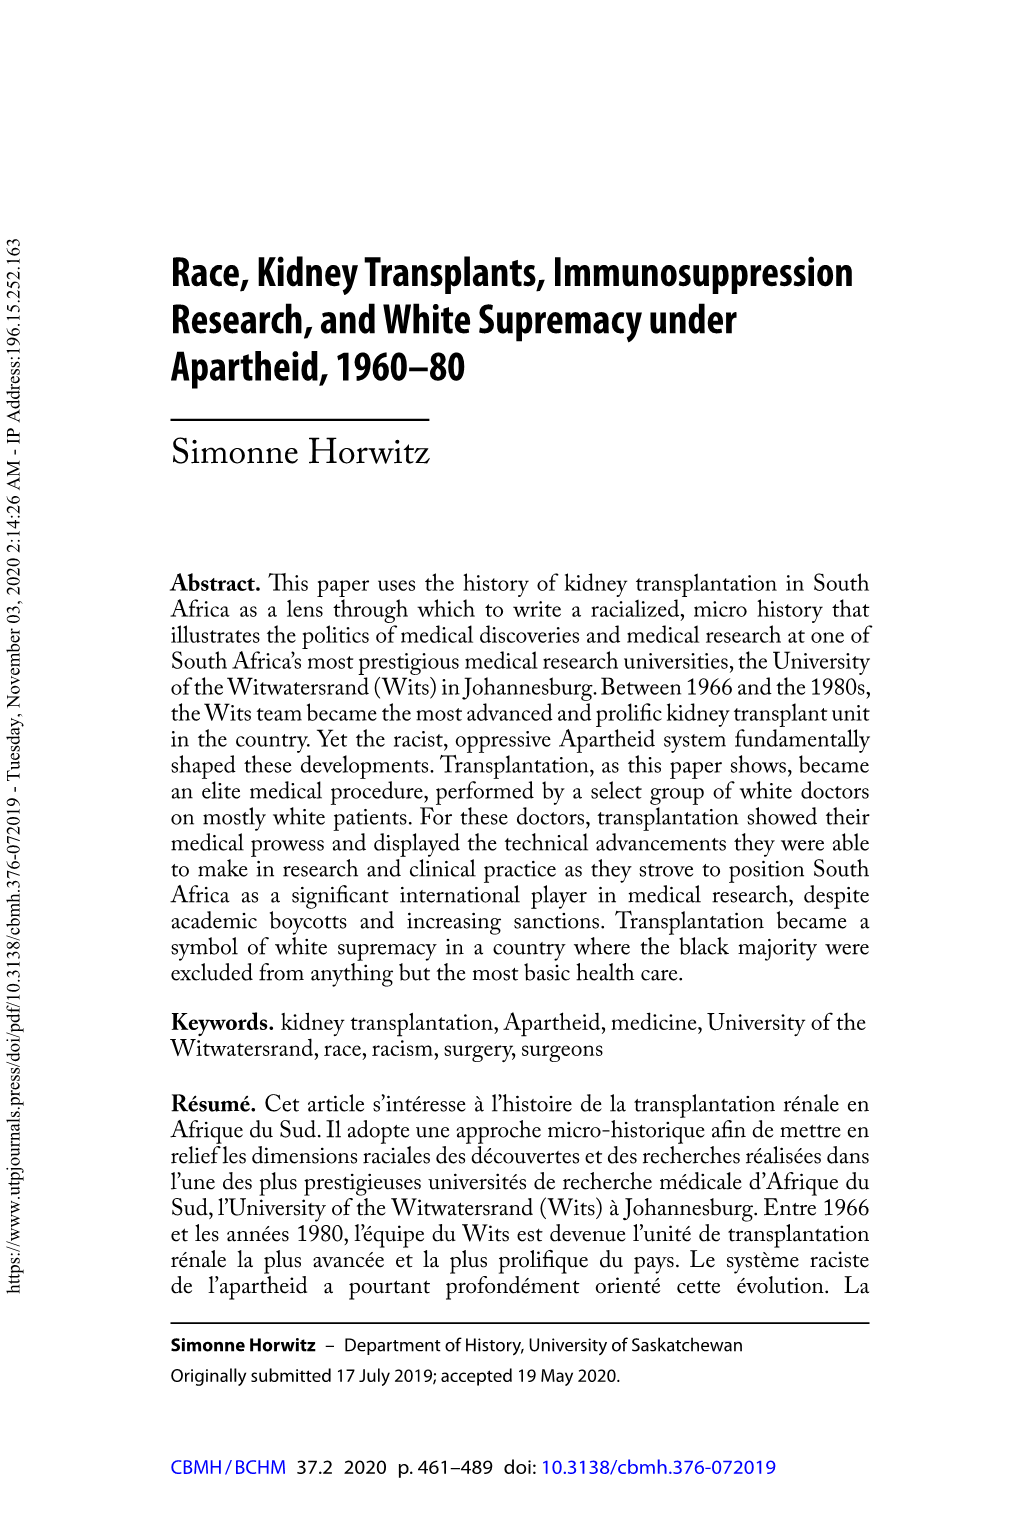 Race, Kidney Transplants, Immunosuppression Research, and White Supremacy Under Apartheid, 1960–80